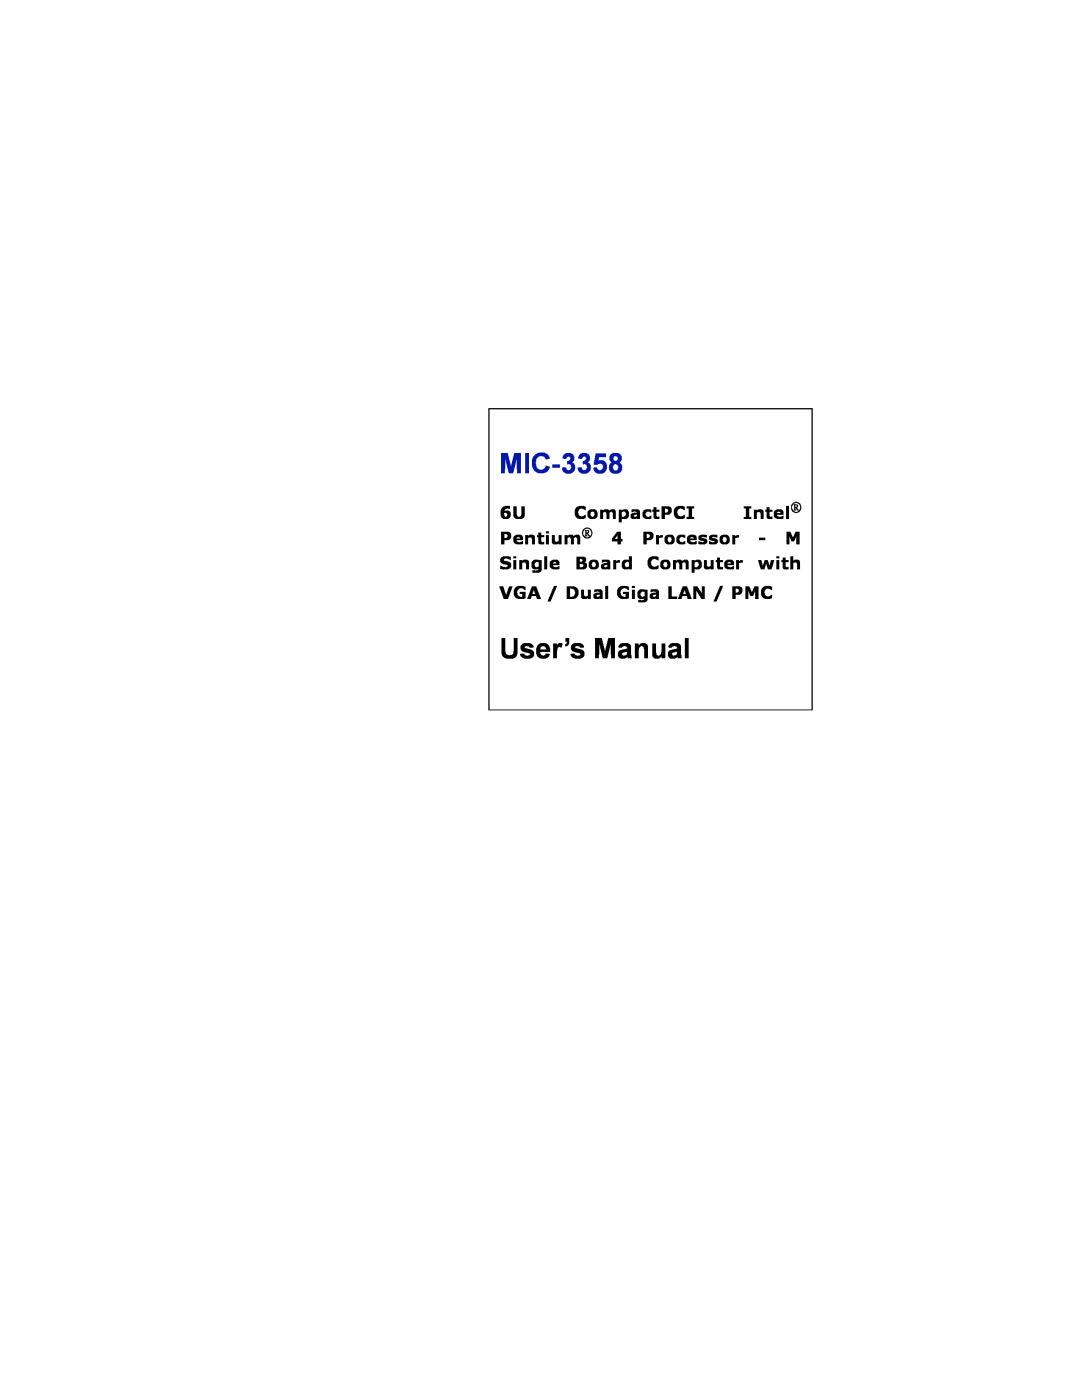 Intel MIC-3358 user manual User’s Manual, VGA / Dual Giga LAN / PMC 